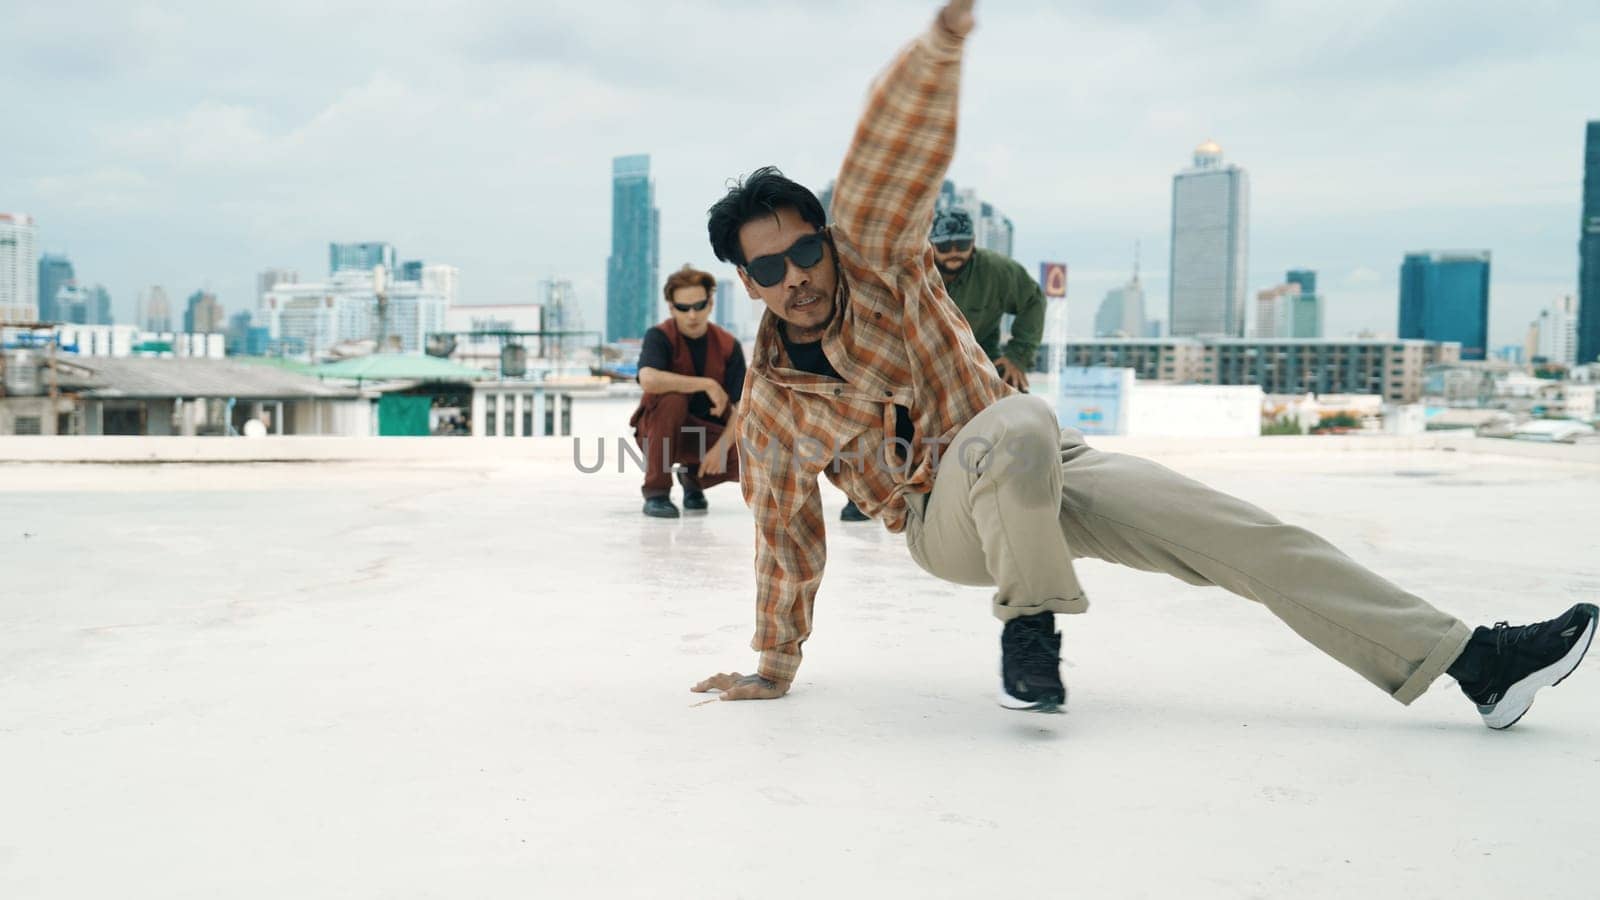 Hispanic break dancer practice B boy dance with friends at roof top. Endeavor. by biancoblue